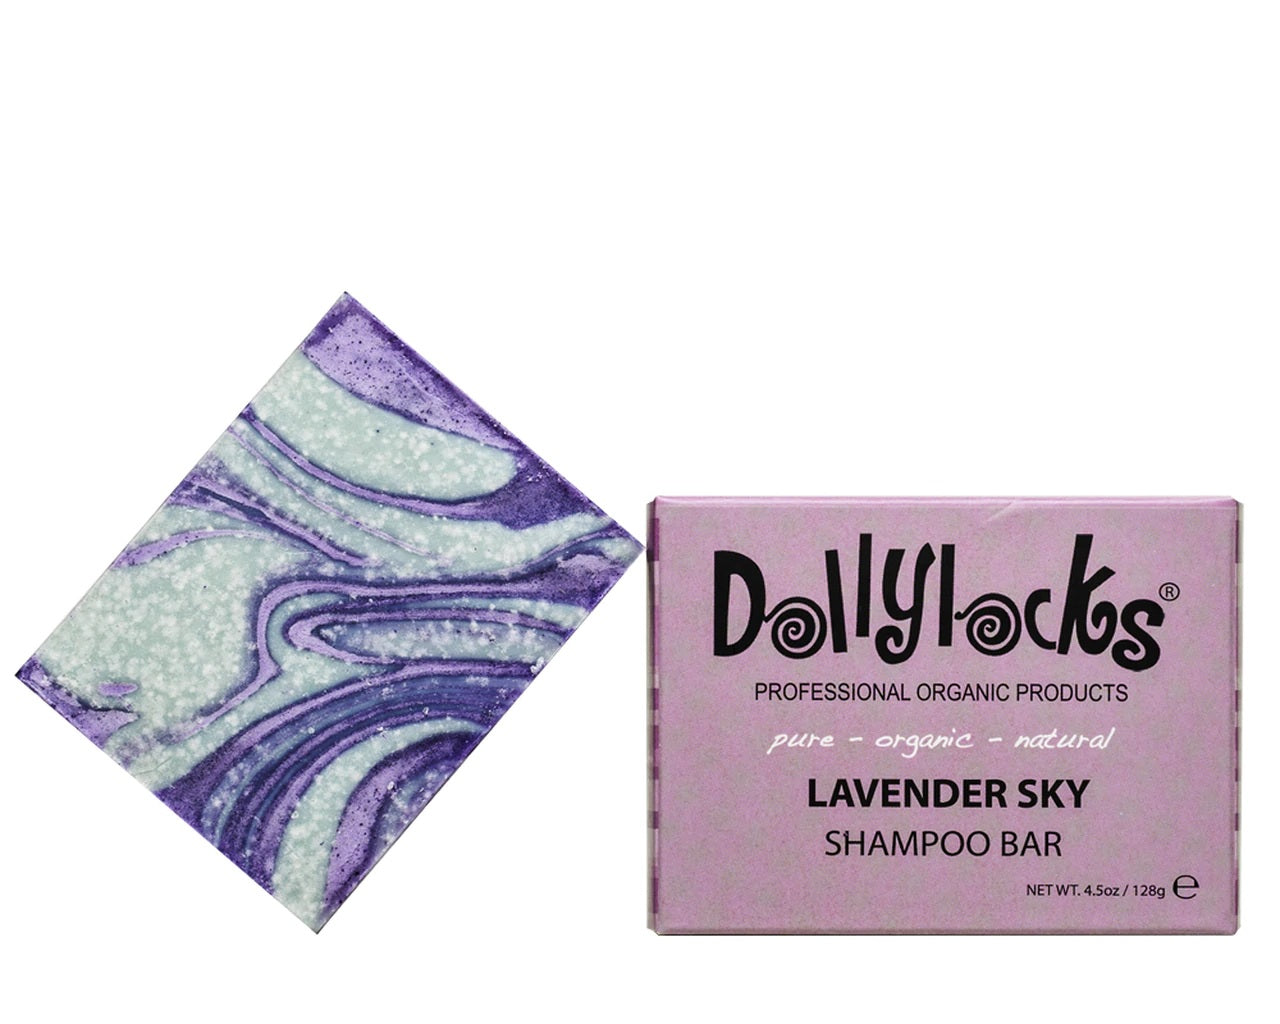 Dollylocks - Dreadlocks Shampoo Bar - Lavender Sky (4.5oz/128g)